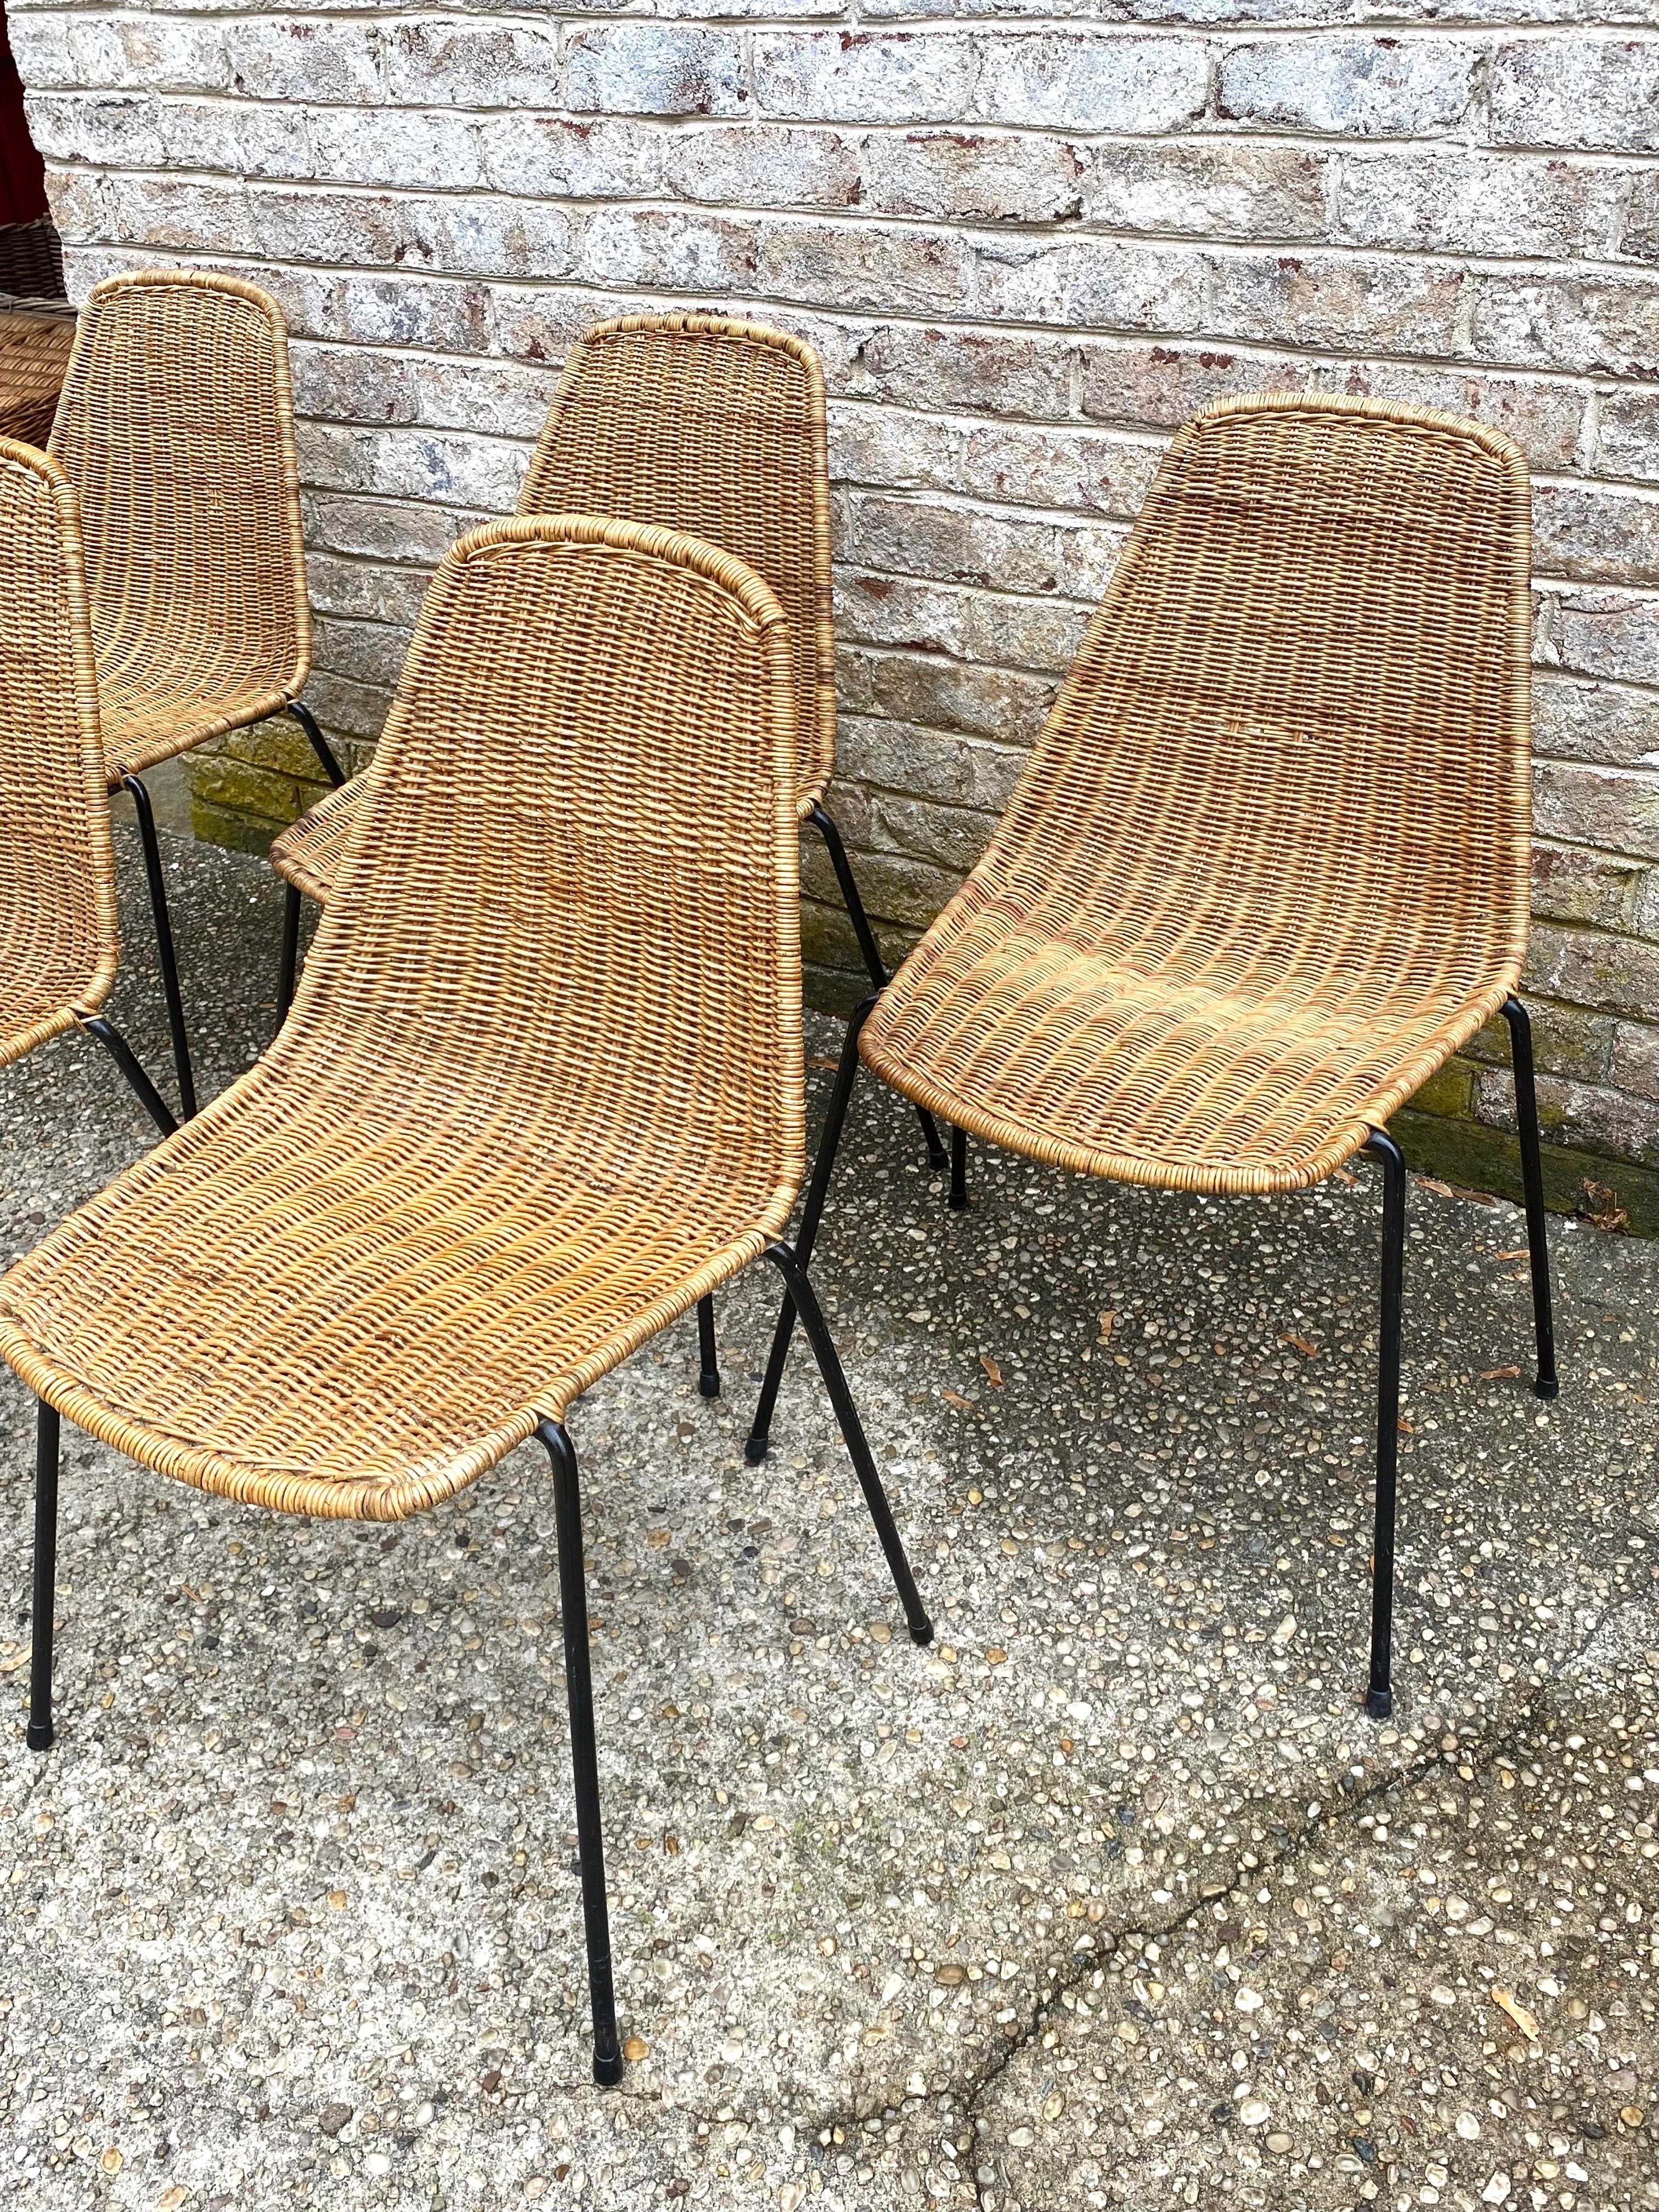 Set of 5 woven rattan Gian Franco Legler Basket chairs.... all 5 stack